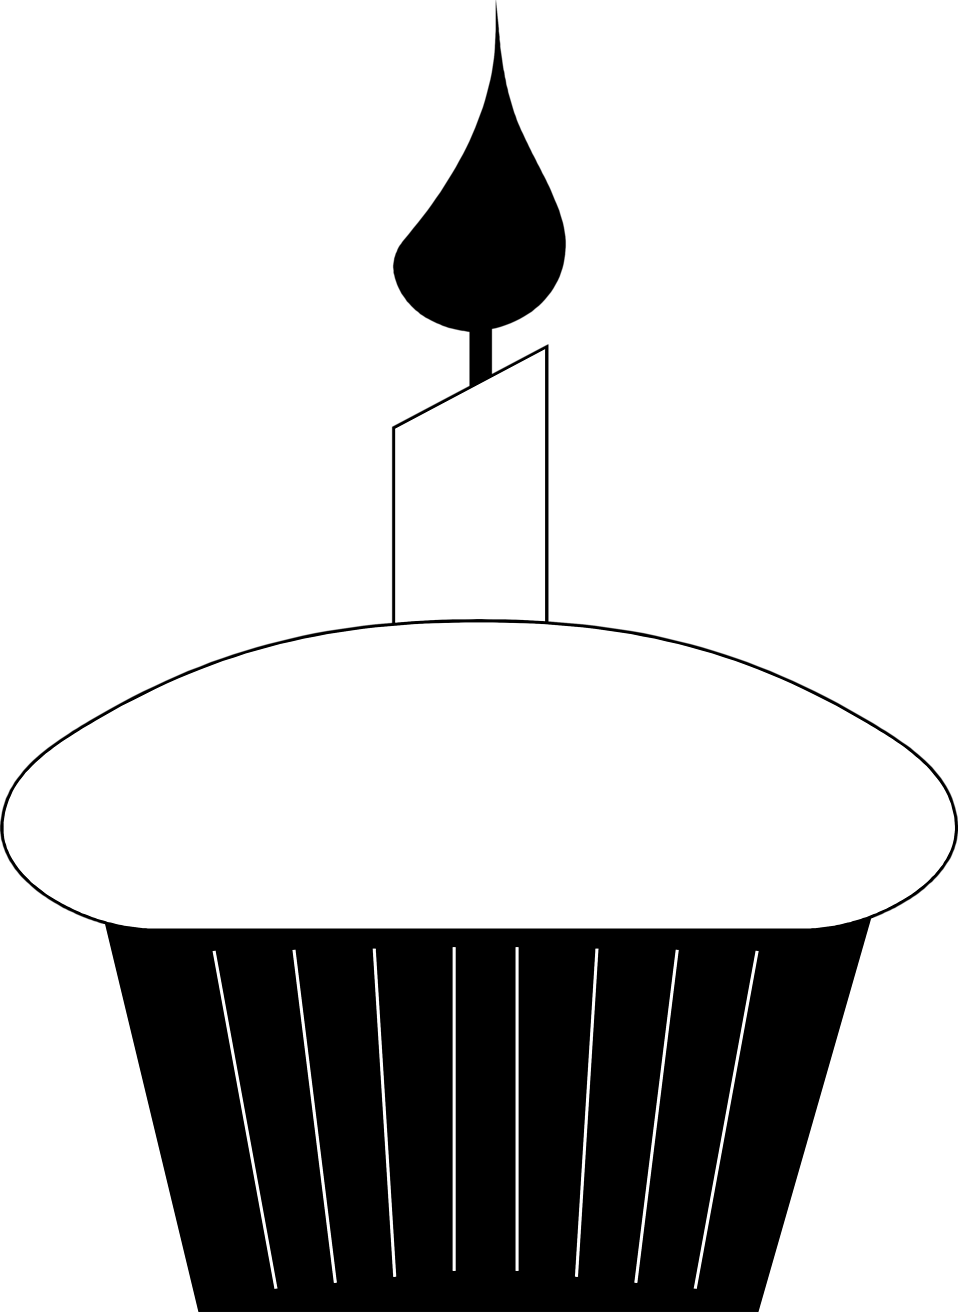 free black and white cupcake clipart - photo #25